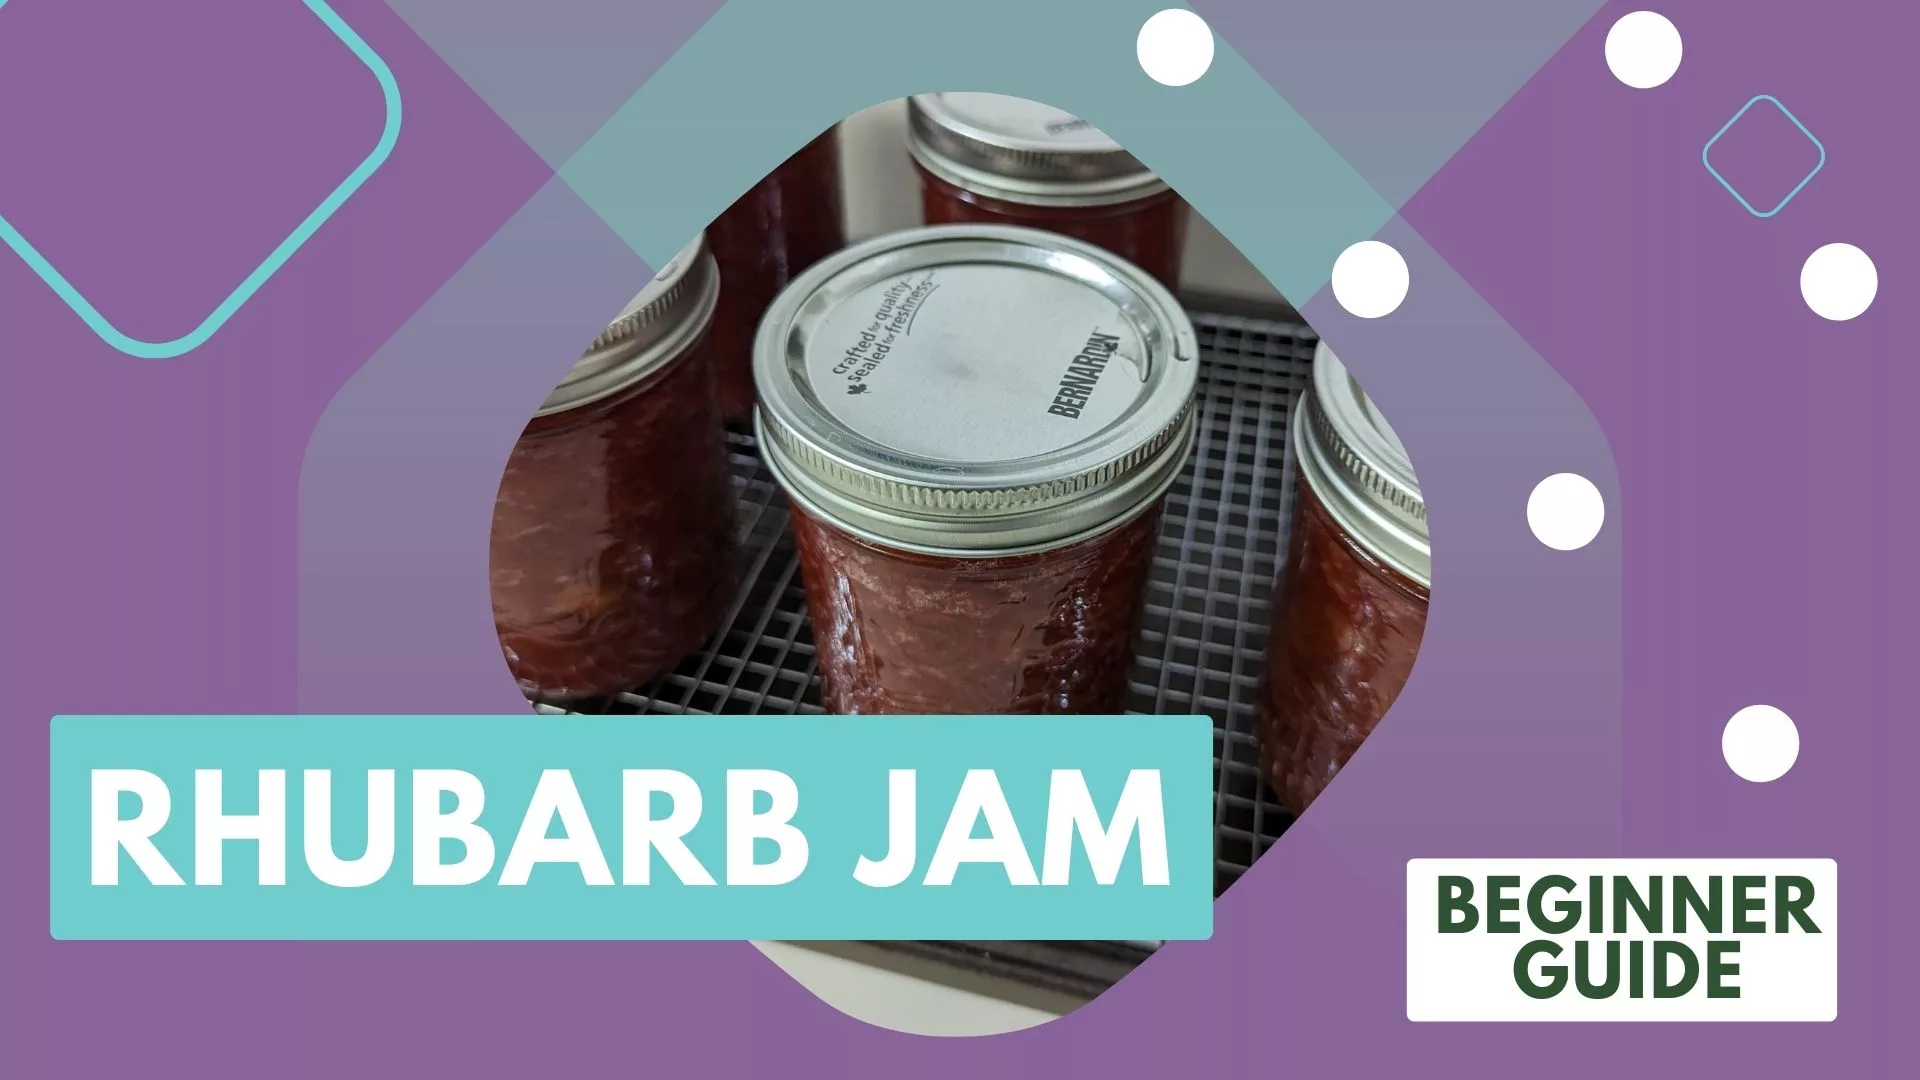 How to Make Rhubarb Jam: A Beginner's Guide